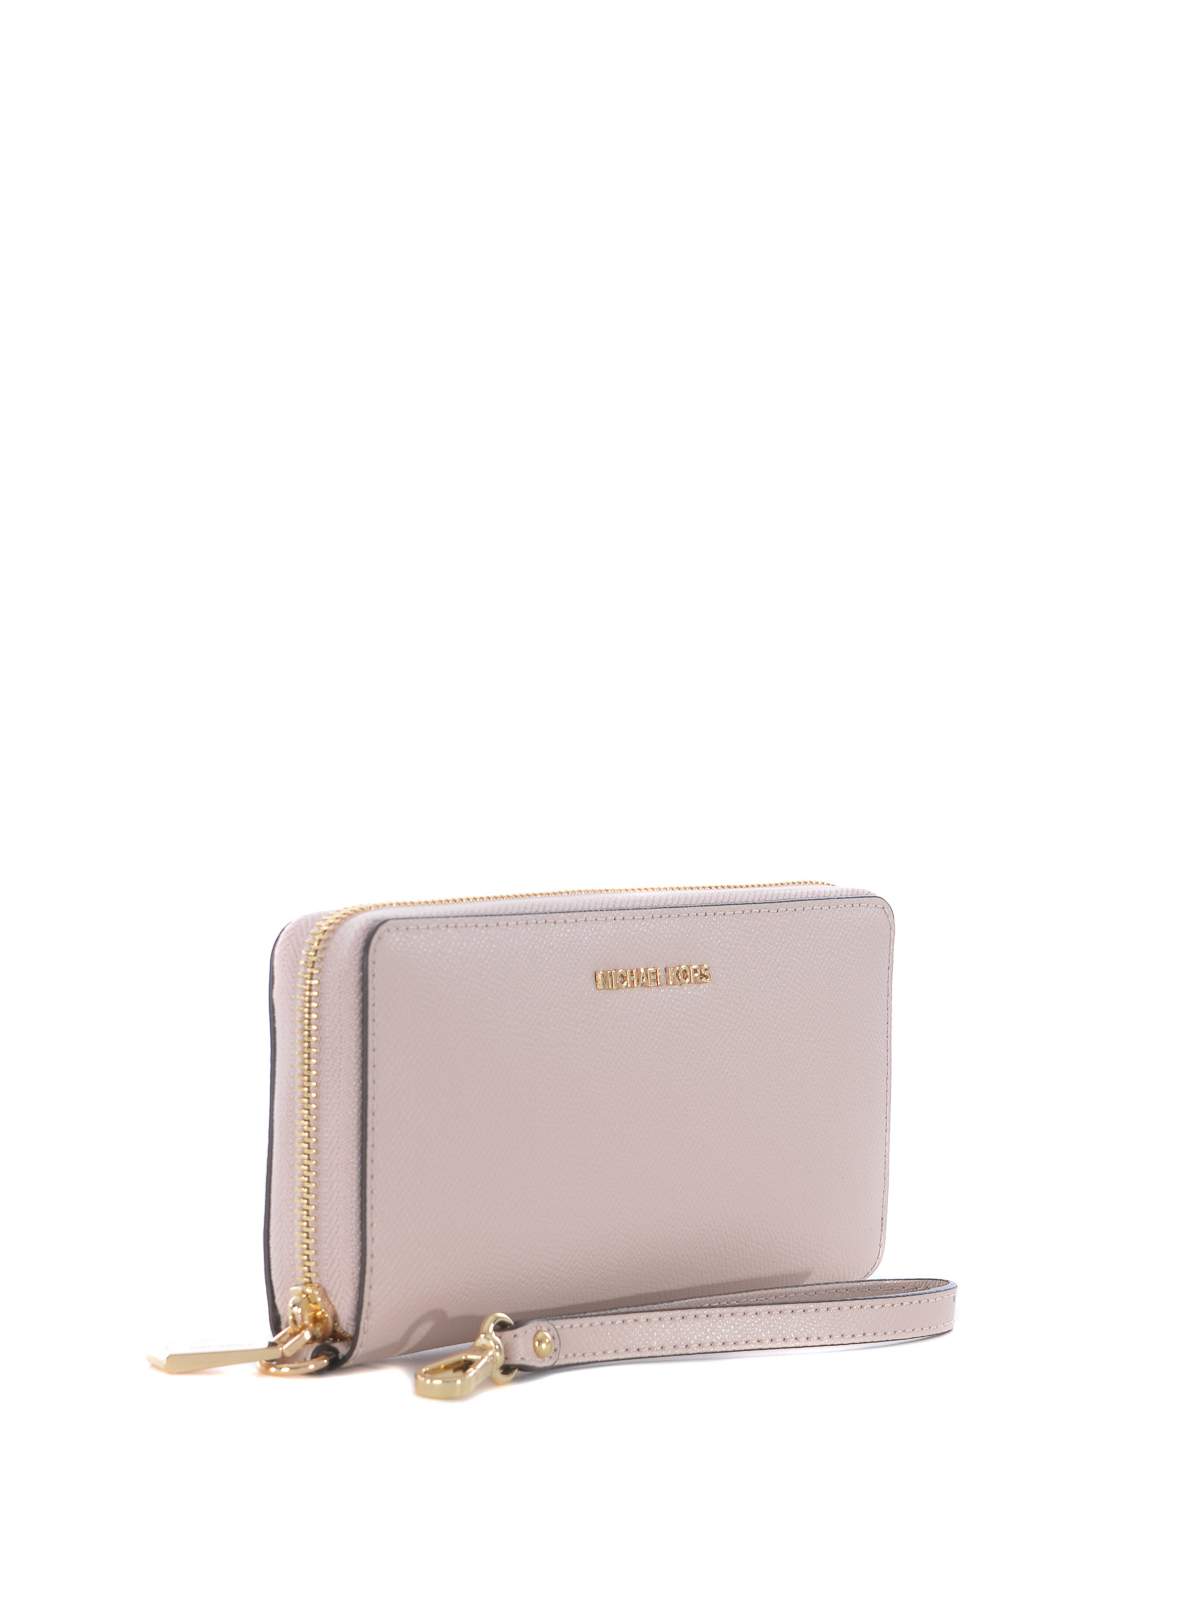 Wallets & purses Michael Kors - Light pink saffiano leather wallet -  32S5GTVE9L187